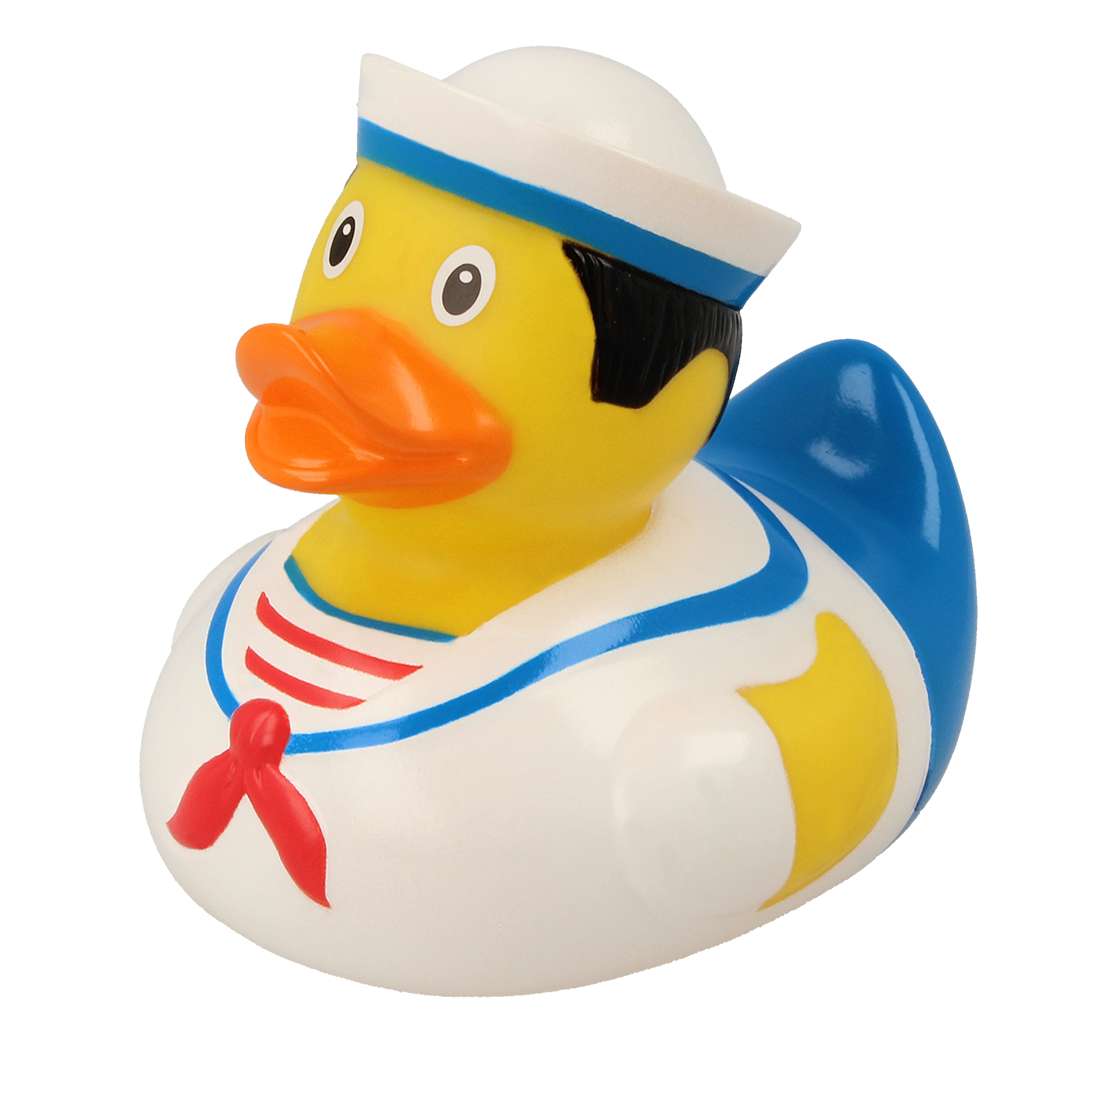 Sailor duck